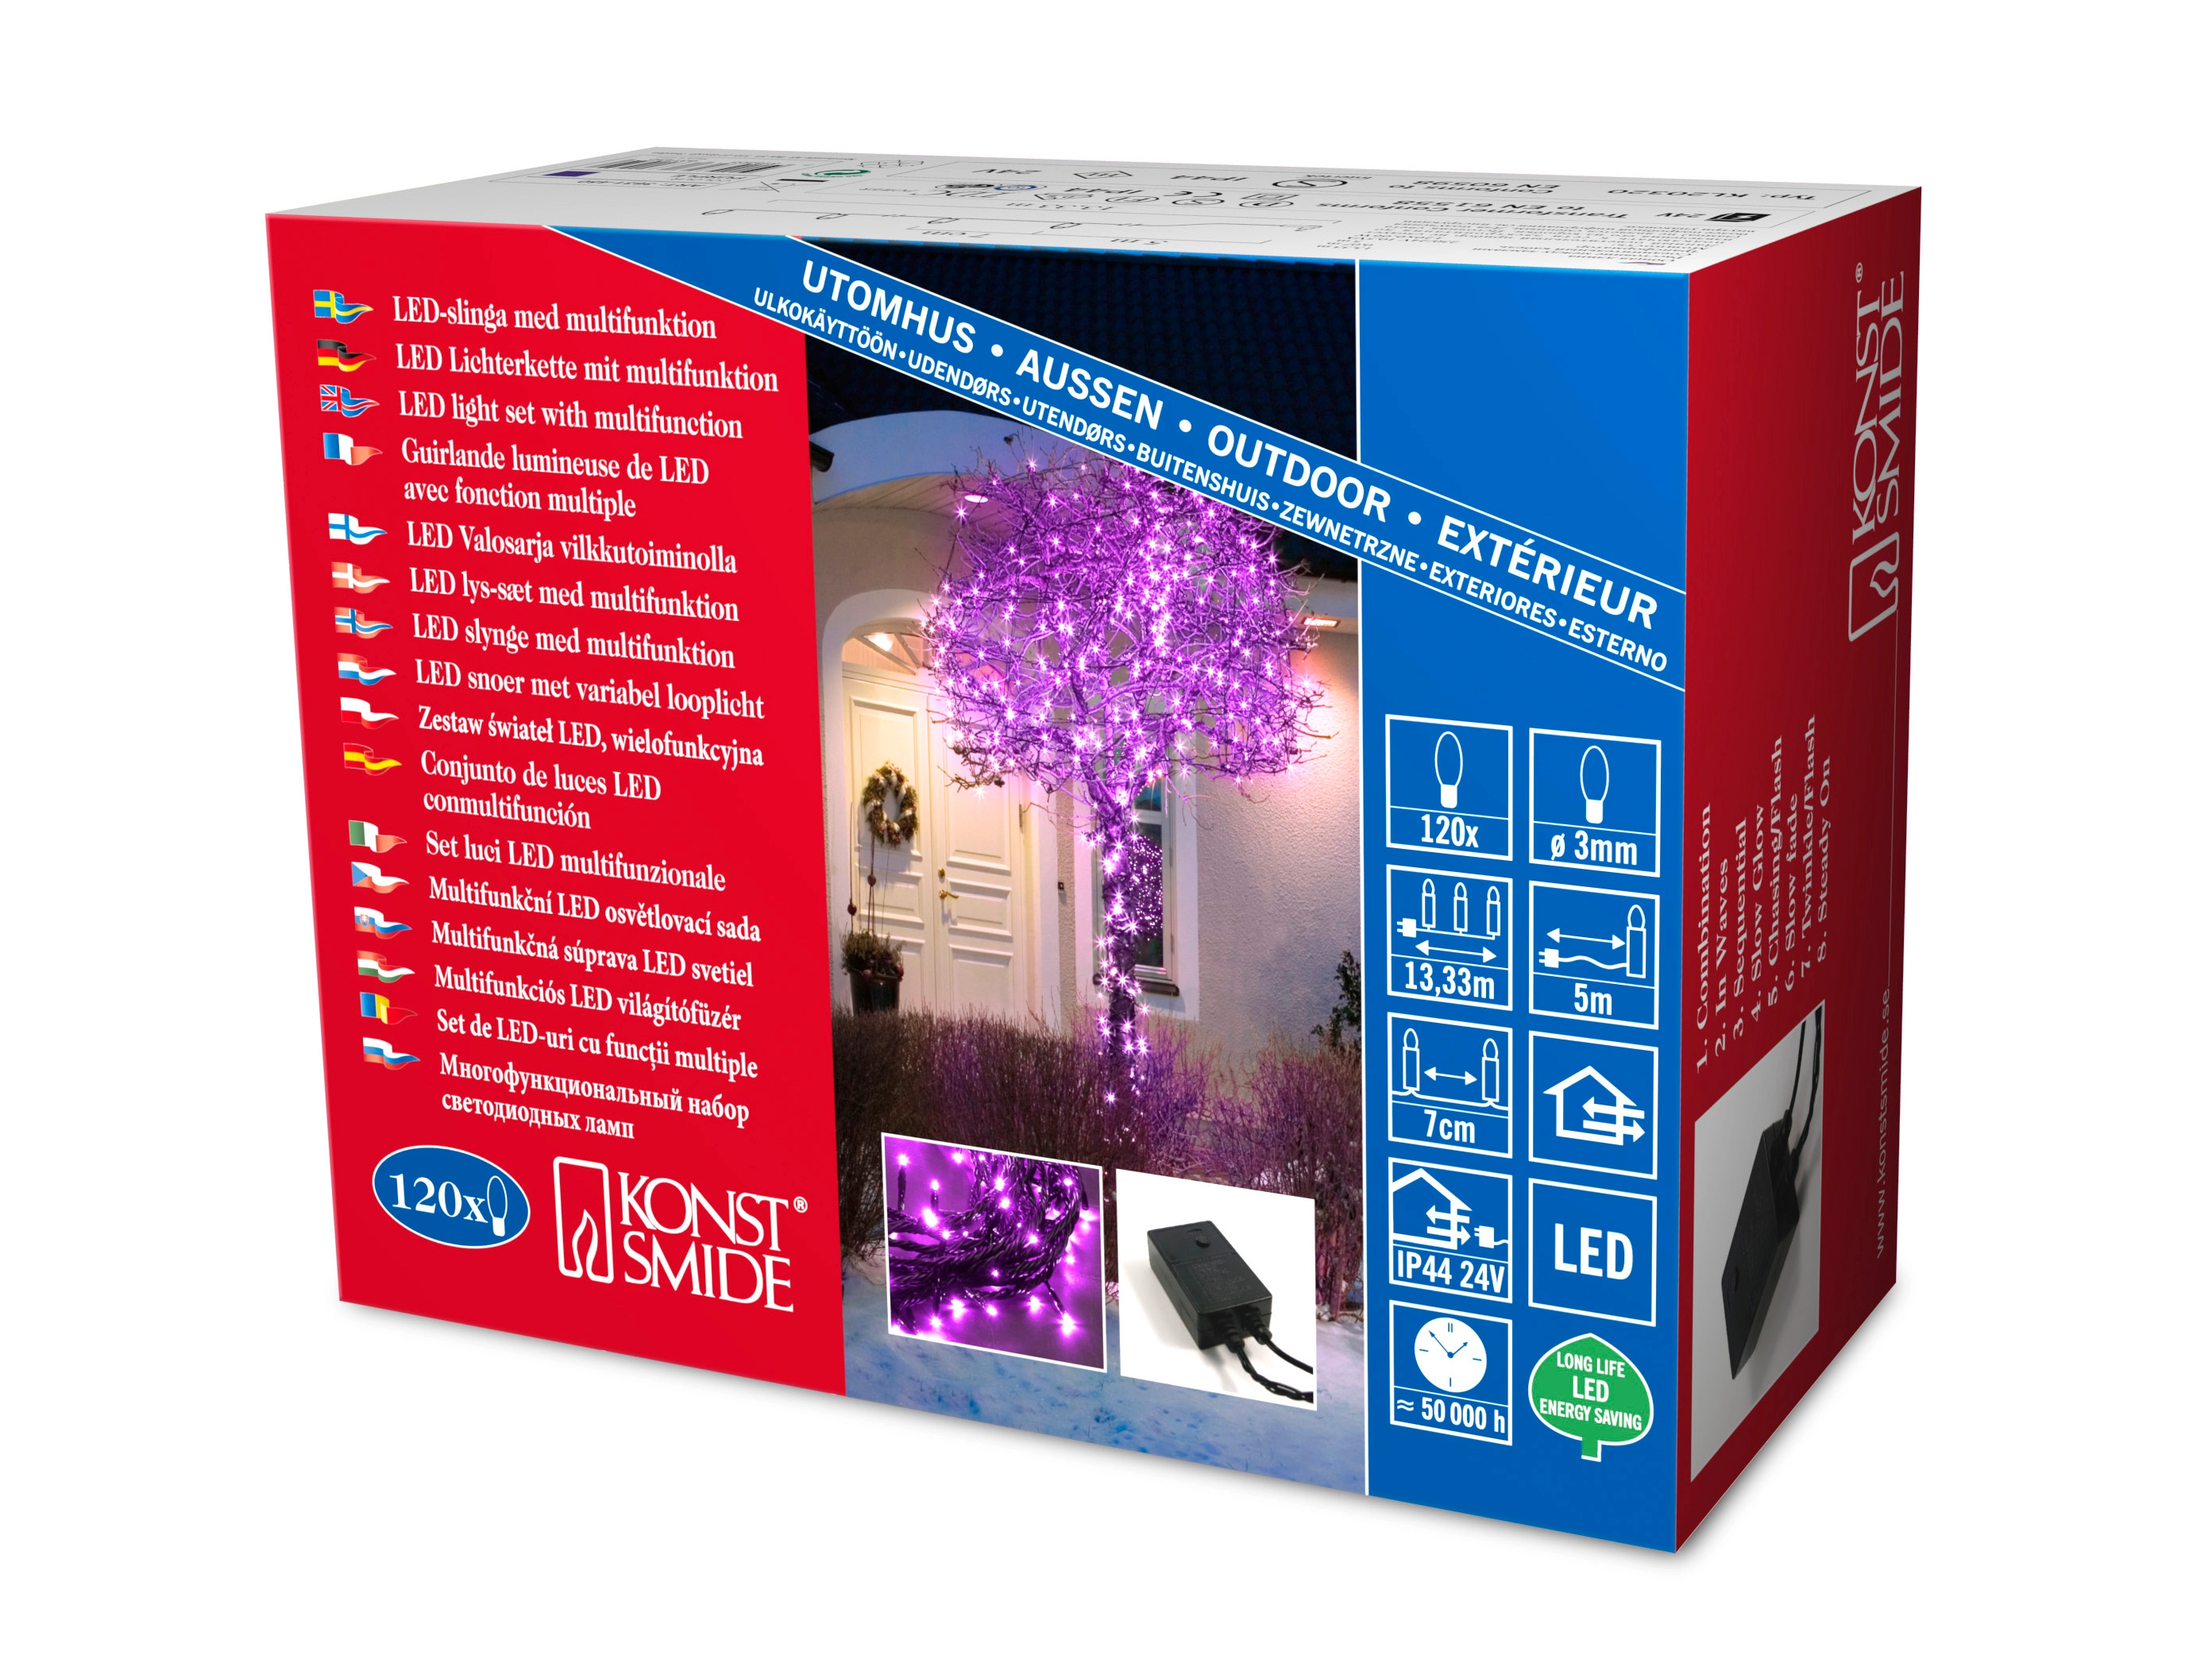 OBI Multifunktion LED-Micro-Lichterkette LED 120 Purpur Konstsmide bei kaufen